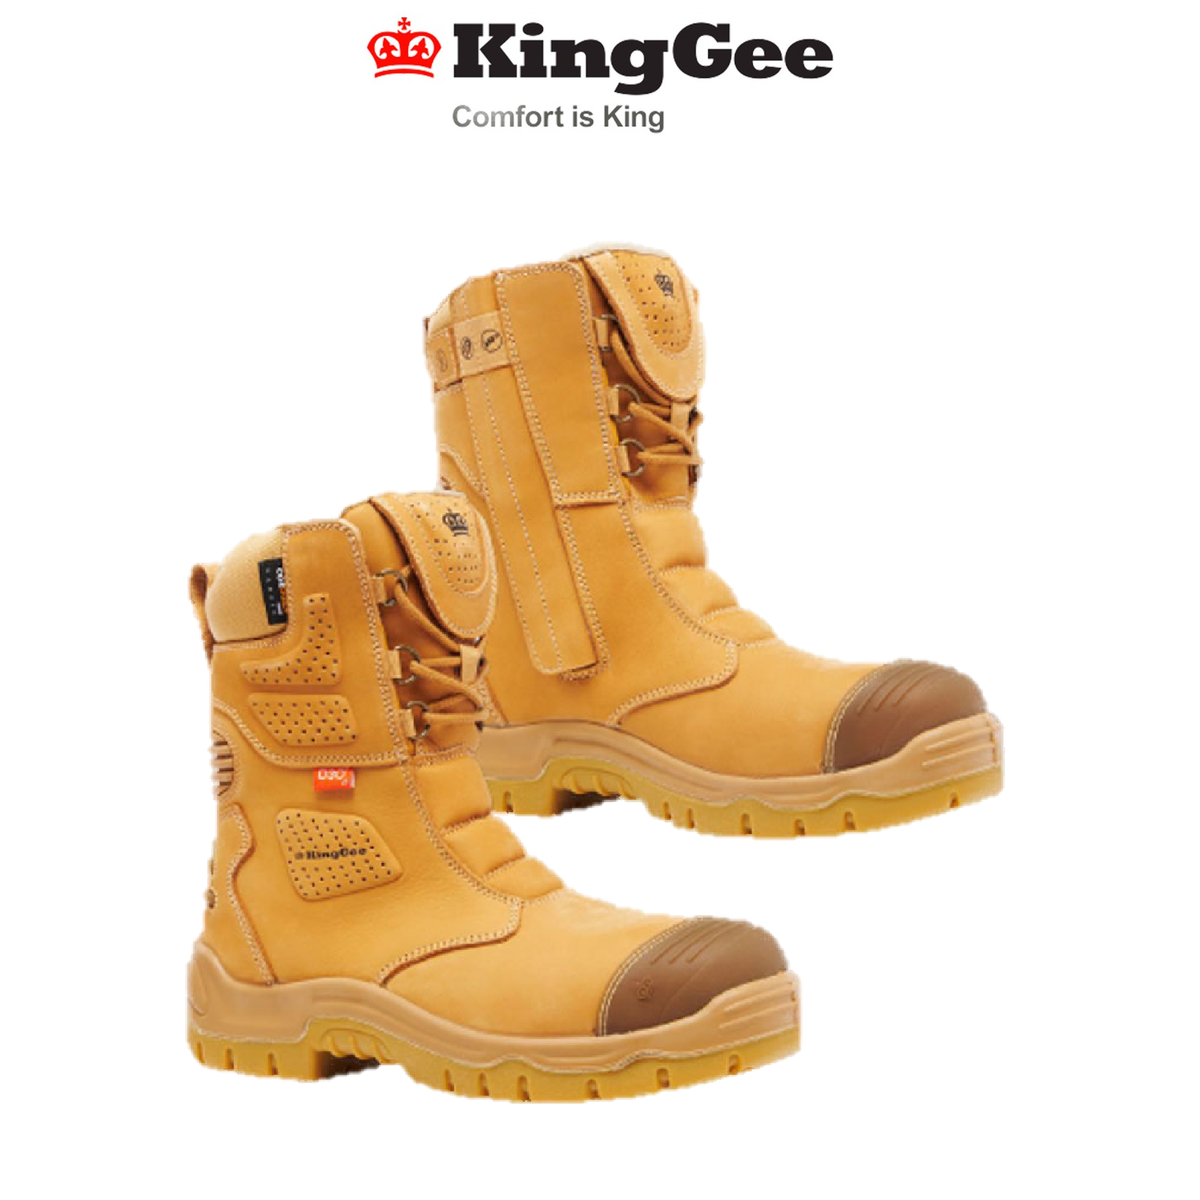 KingGee Mens Bennu Rigger Wheat Water Resistant Full-Grain Leather Work K27173